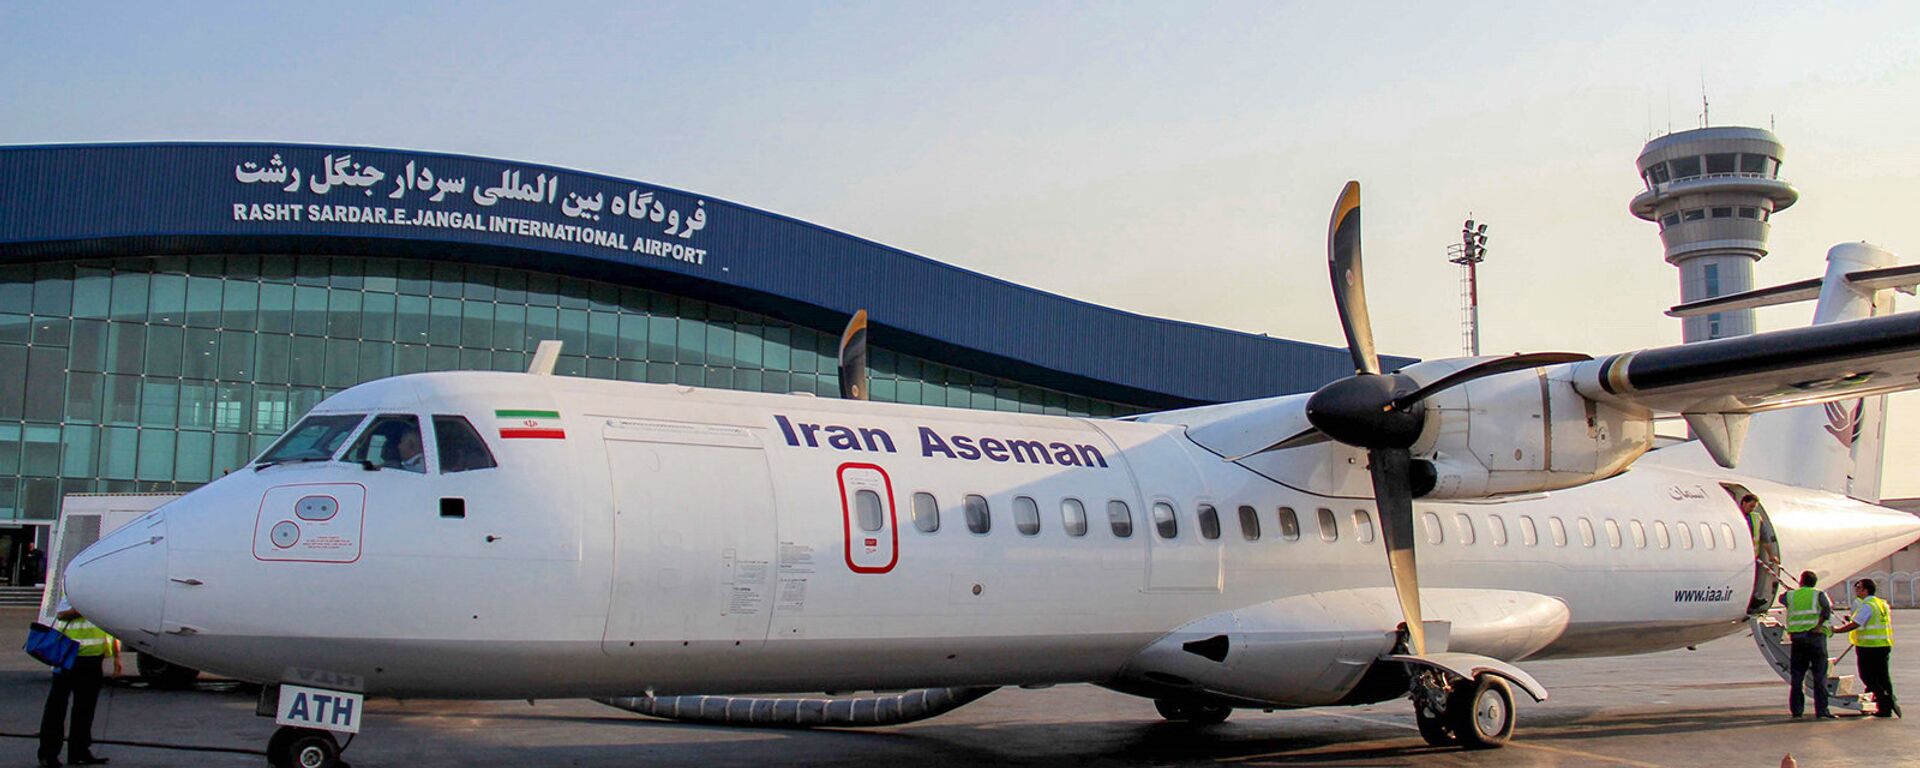 Самолет ATR 72 авиакомпании Iran Aseman Airlines в Международном аэропорту Решта, Иран - Sputnik Արմենիա, 1920, 28.02.2021